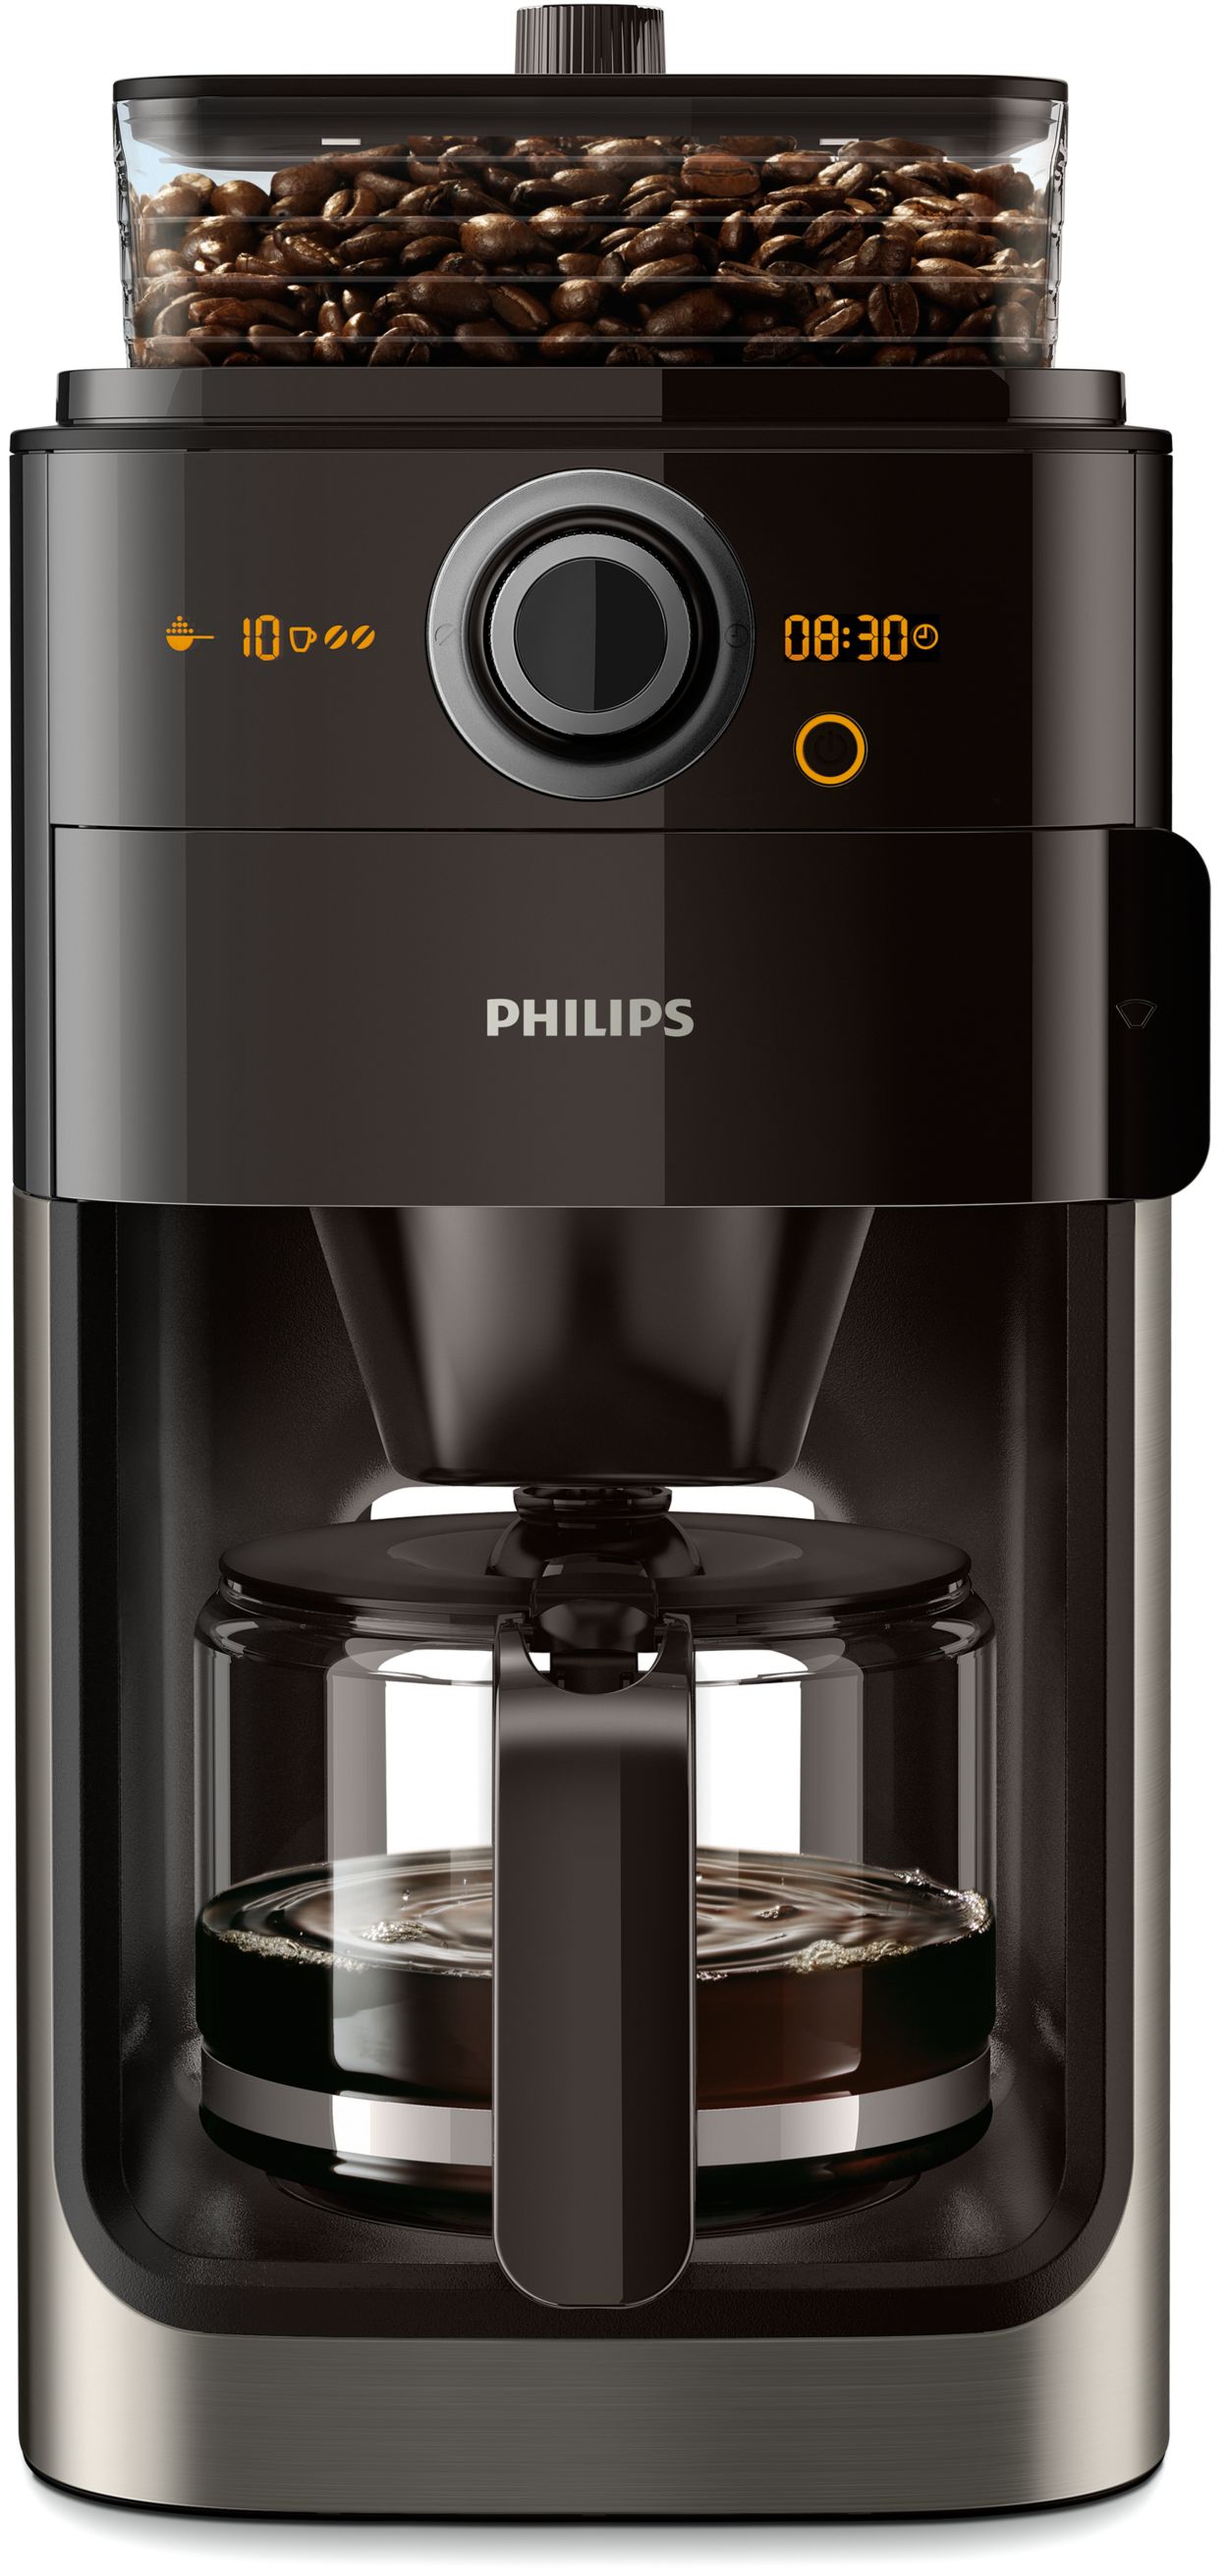 Кофеварка филипс капельная. Кофеварка Philips hd7767. Кофеварка Philips hd7767/00. Кофемашина Philips Grind & Brew hd7767/00. Кофеварка капельная Philips hd7767.